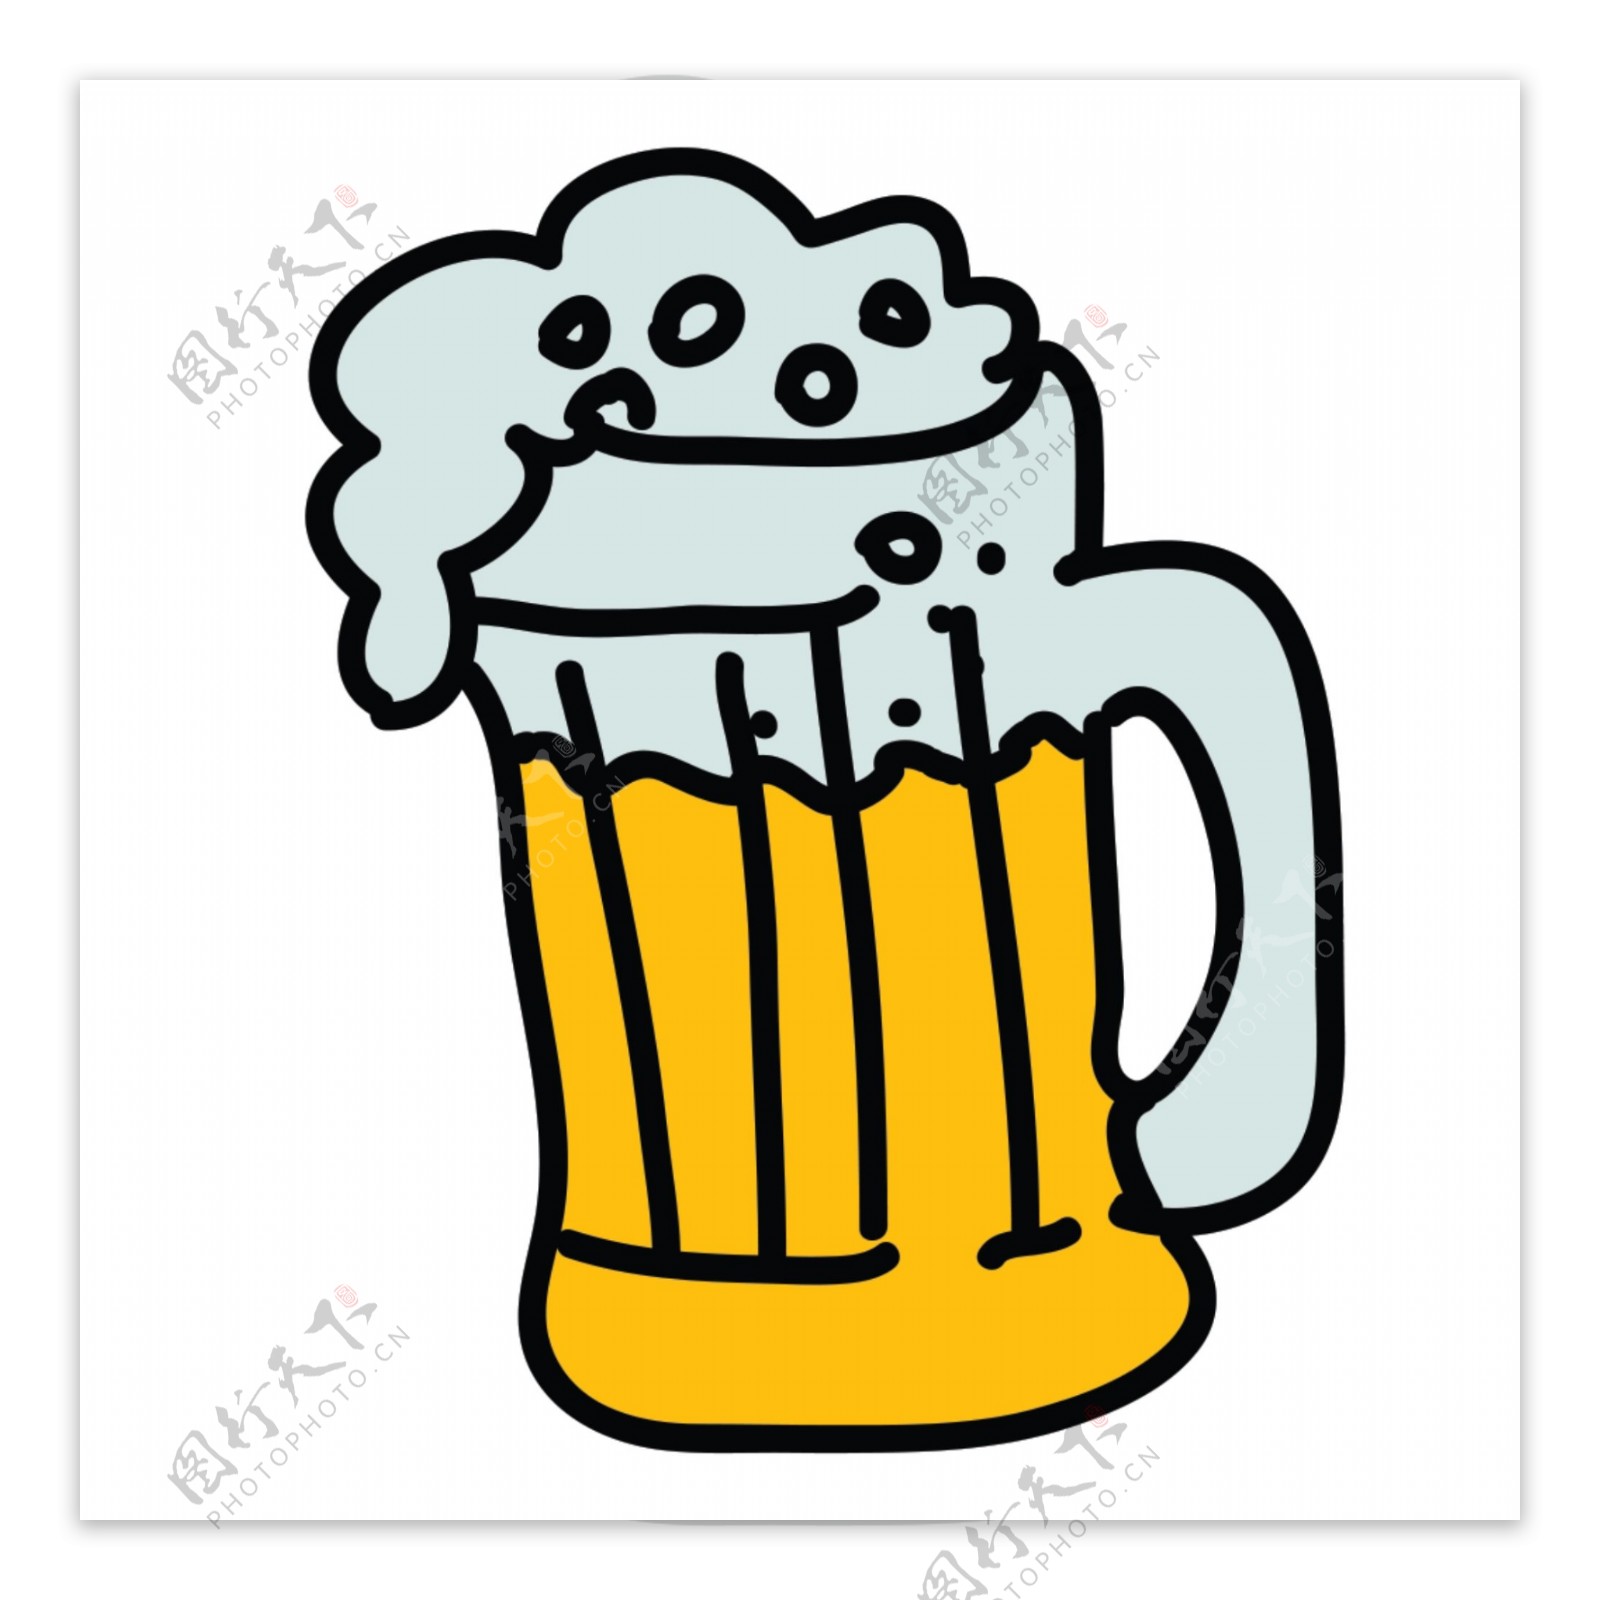 网页UI啤酒icon图标设计